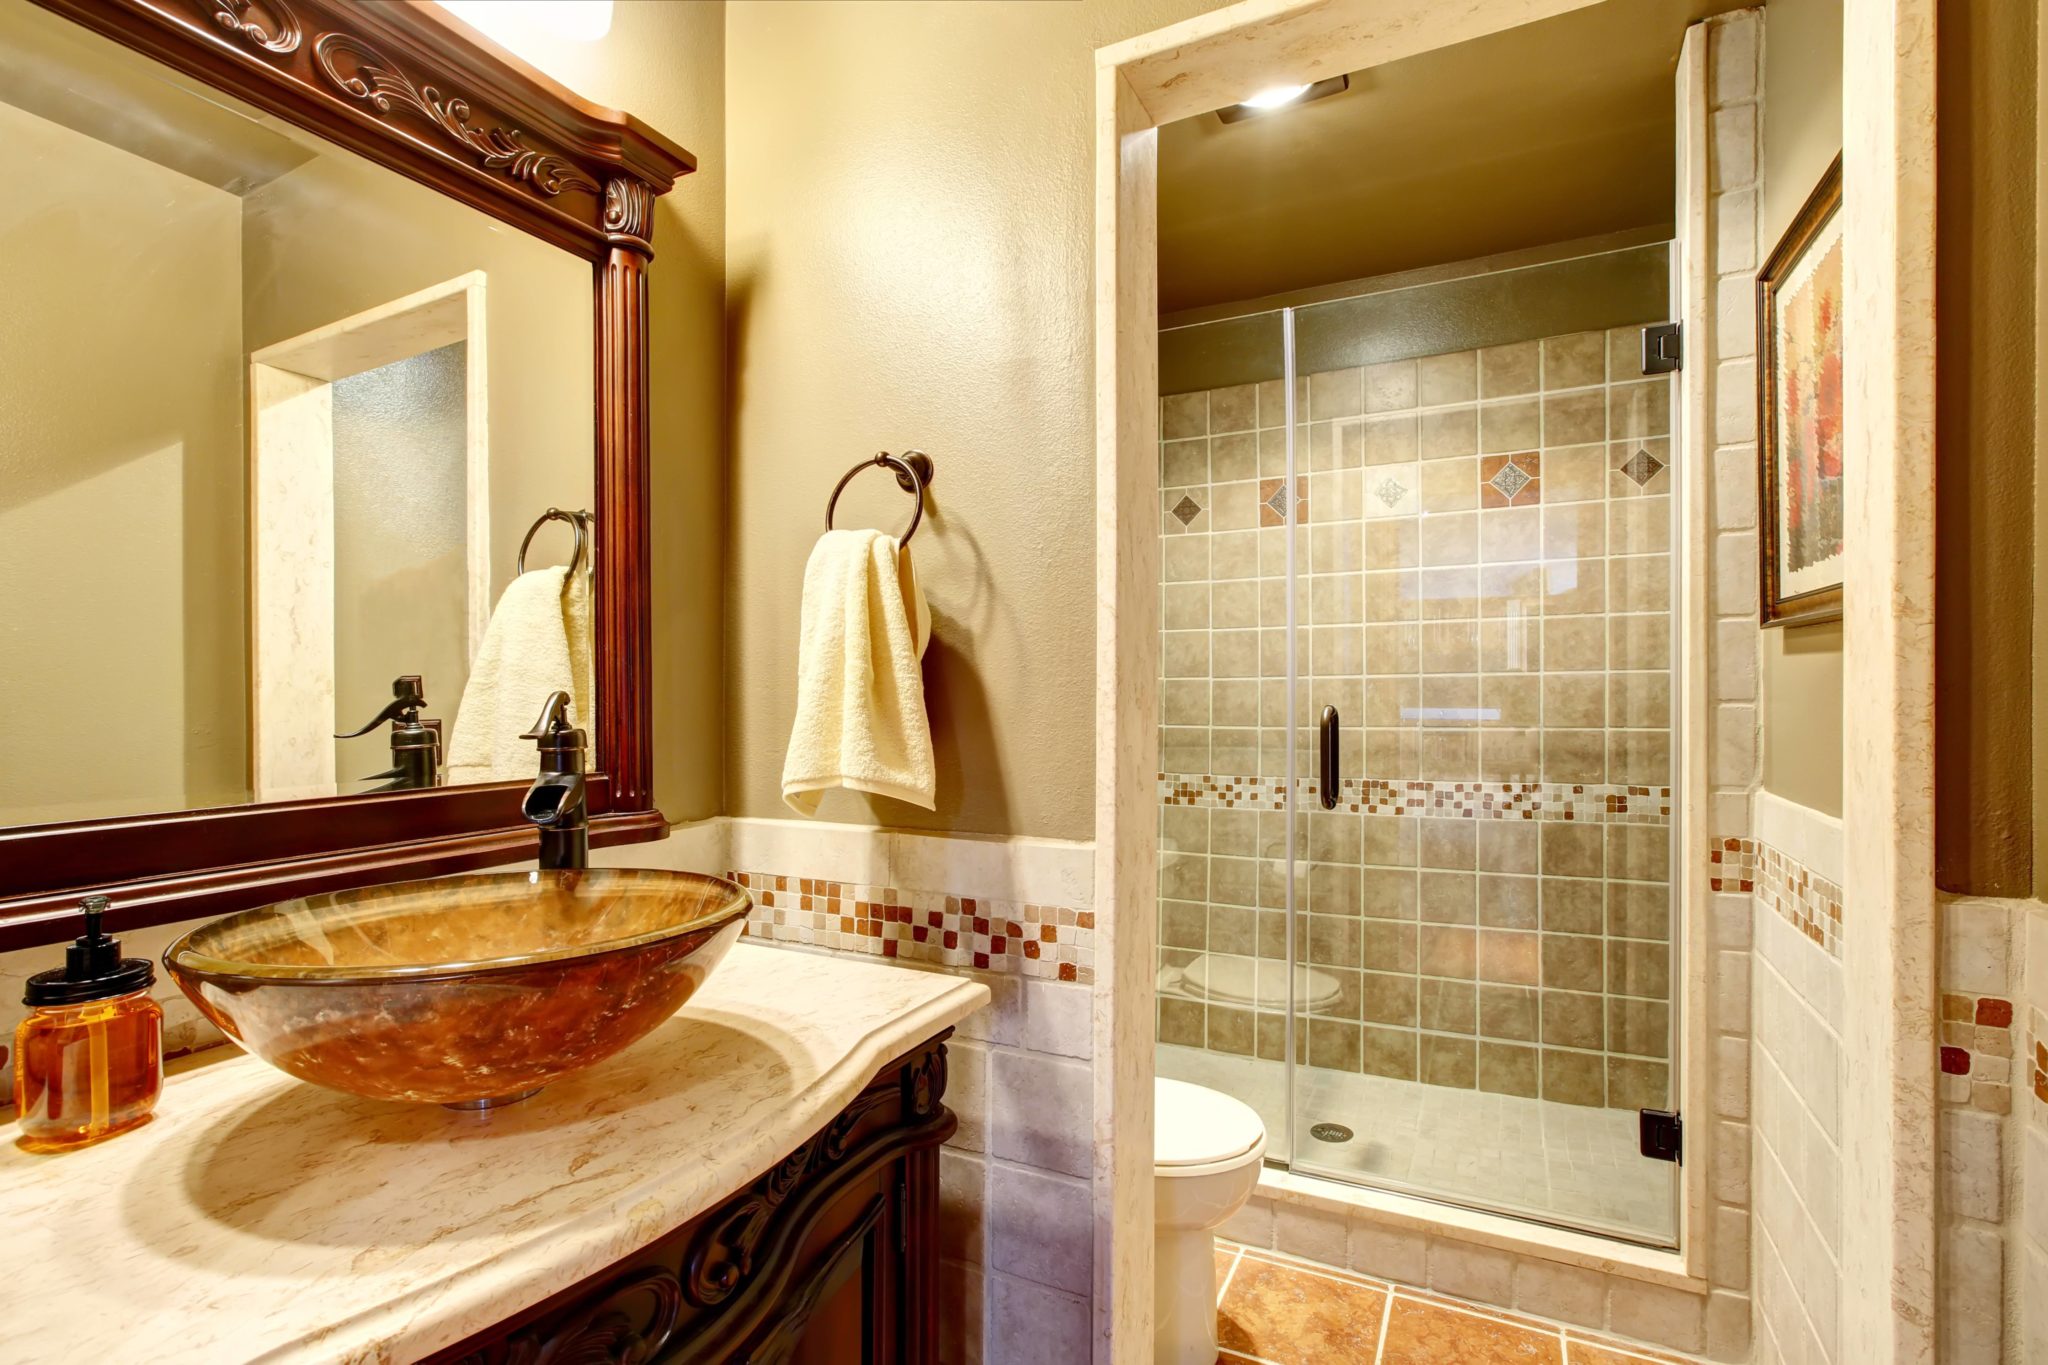 vanity, Bathroom interior in luxury house. Rich bathroom vanity cabinet with vessel sink and mirror. View of shower. Northwest, USA